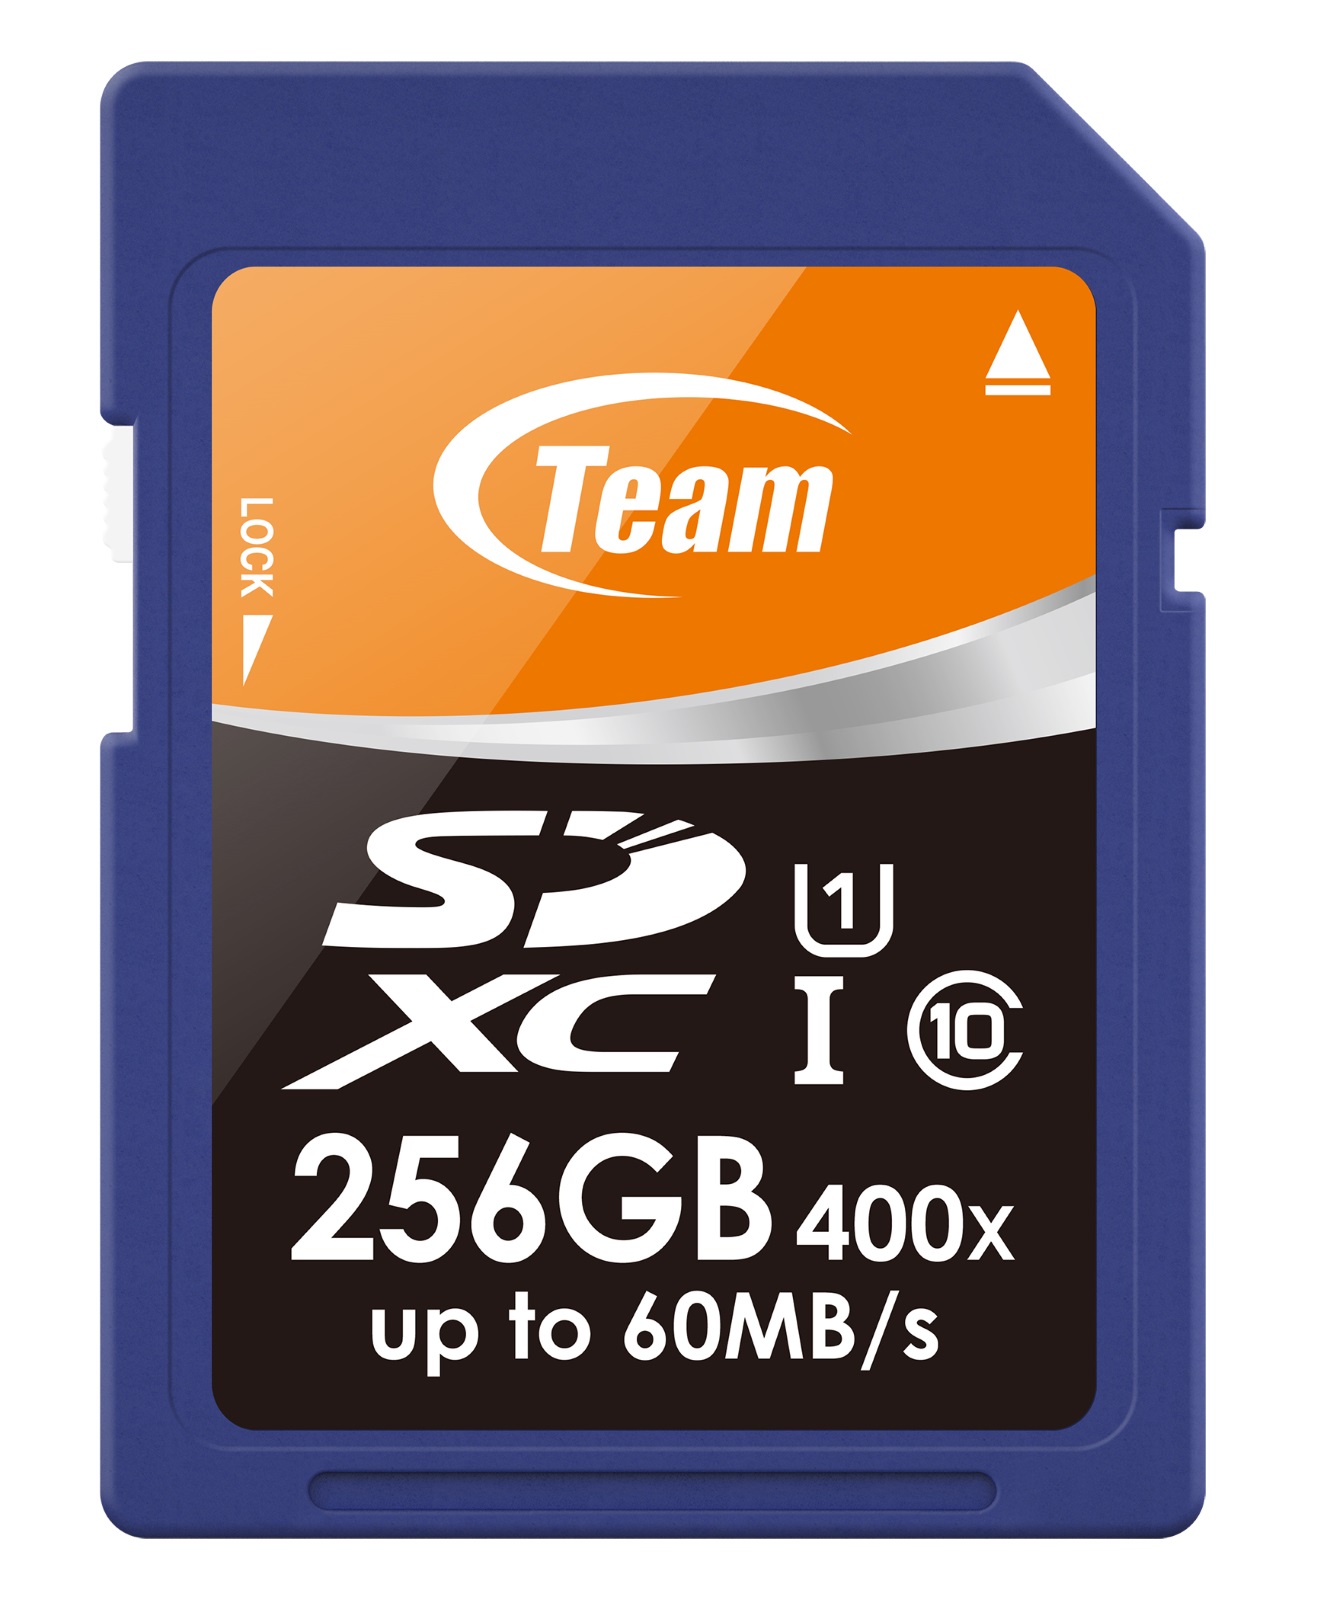 Kodak 256 GB UHS-II U3 V60 CL10 SD Memory Card 